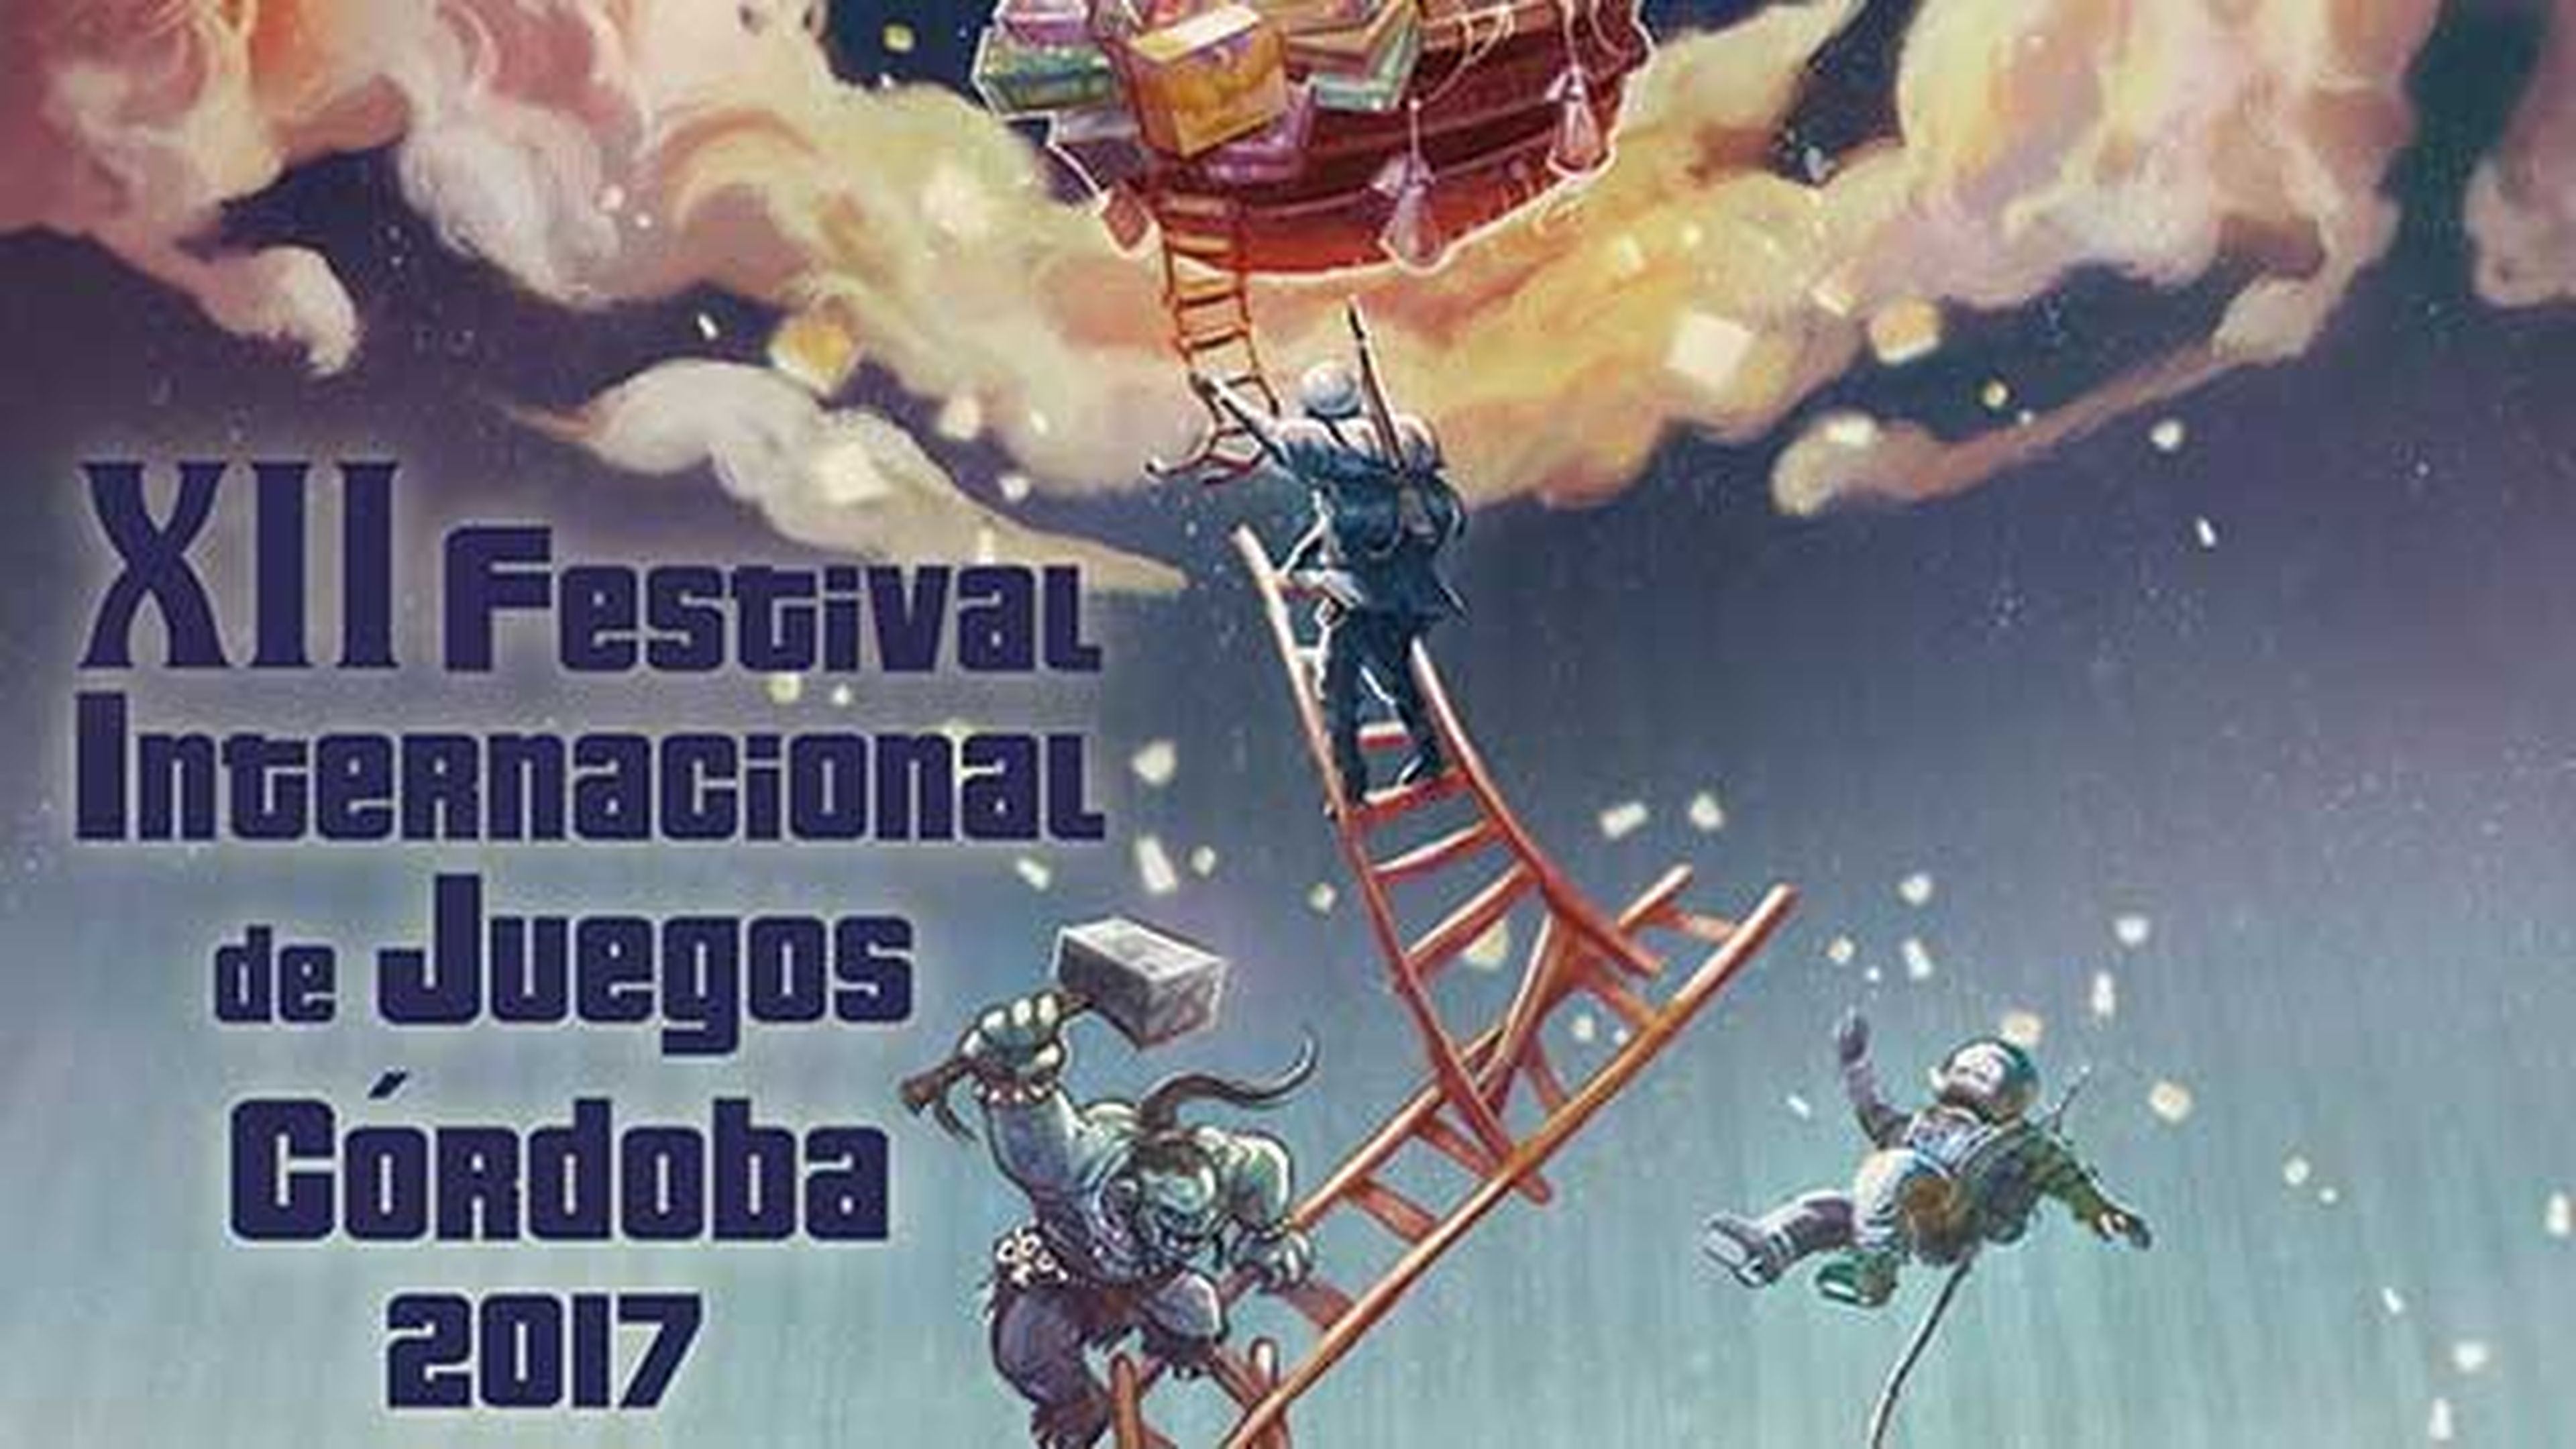 XII Festival Internacional de Juegos Córdoba 2017